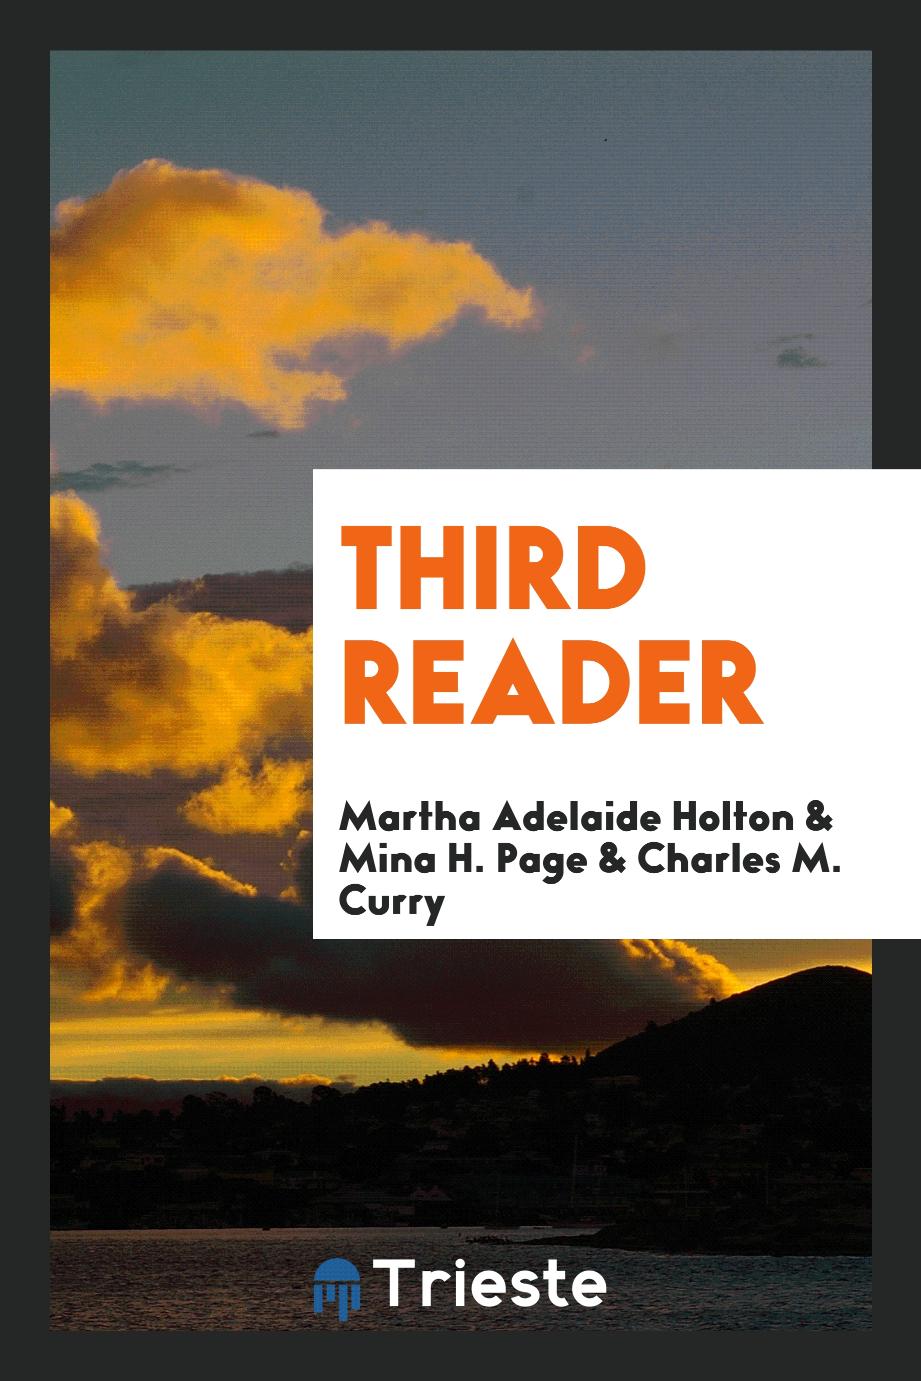 Third reader